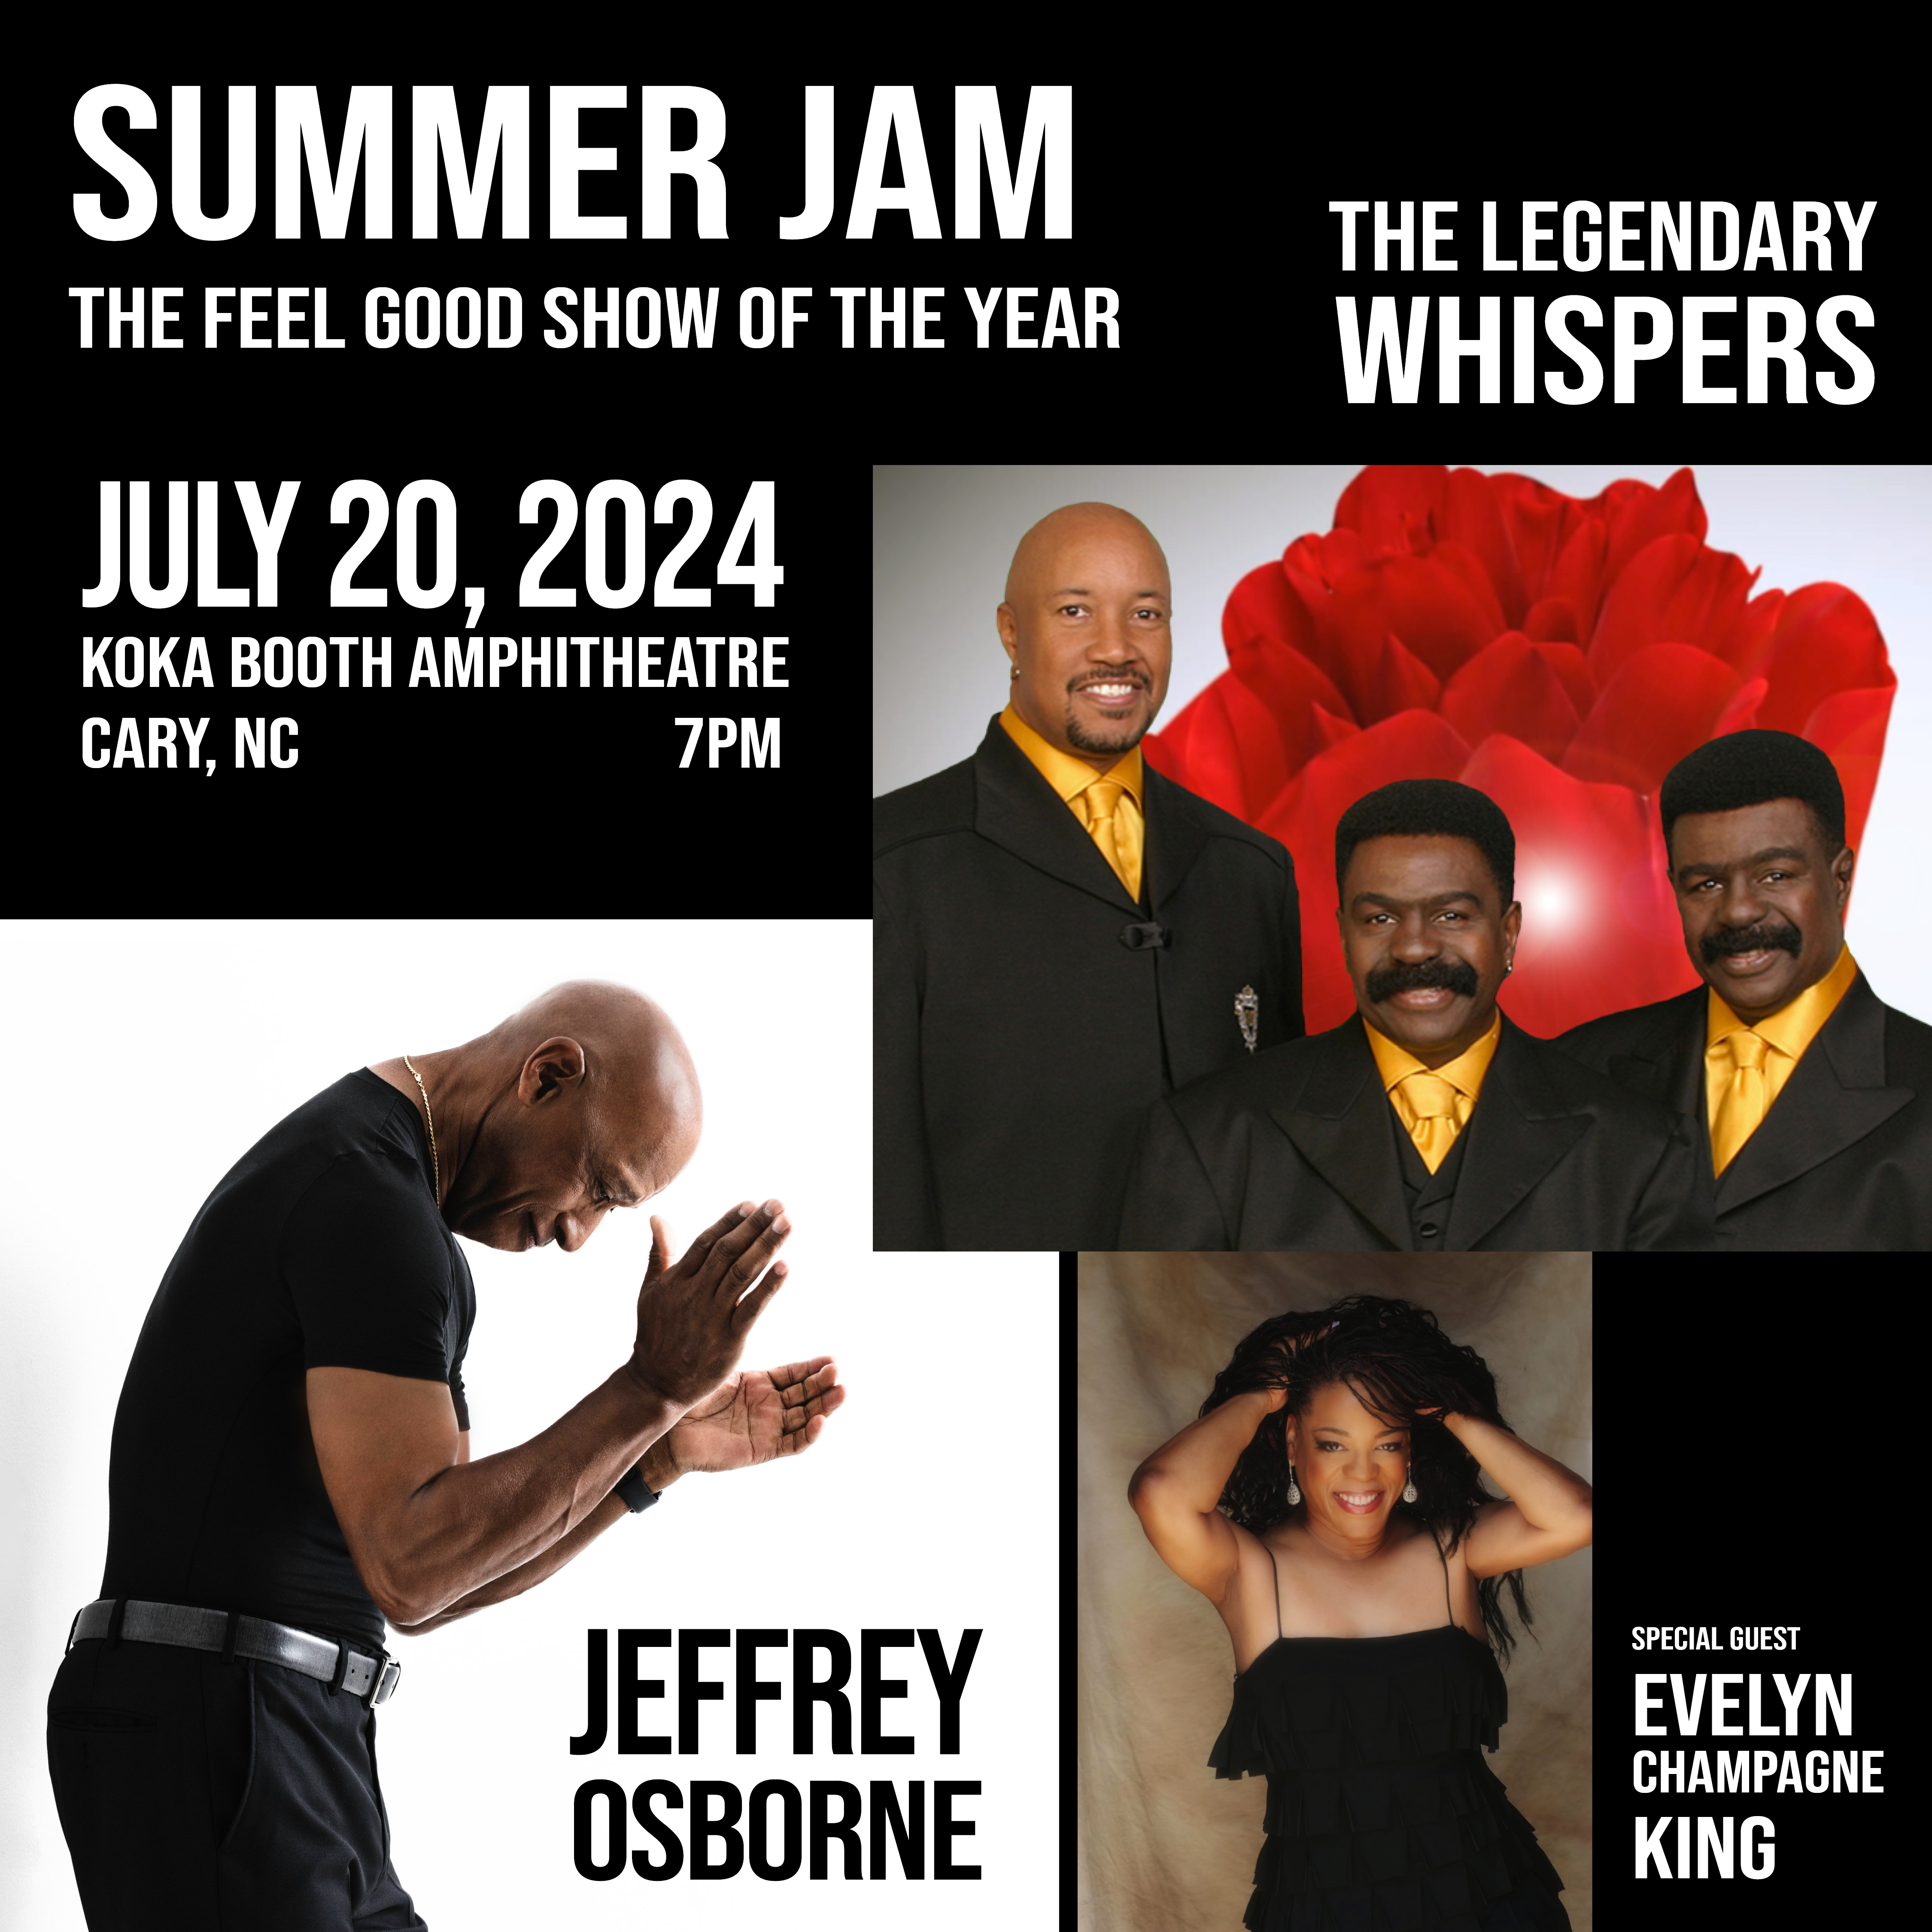 Summer Jam 2024 Promises Legendary Vocals and Memorable Music